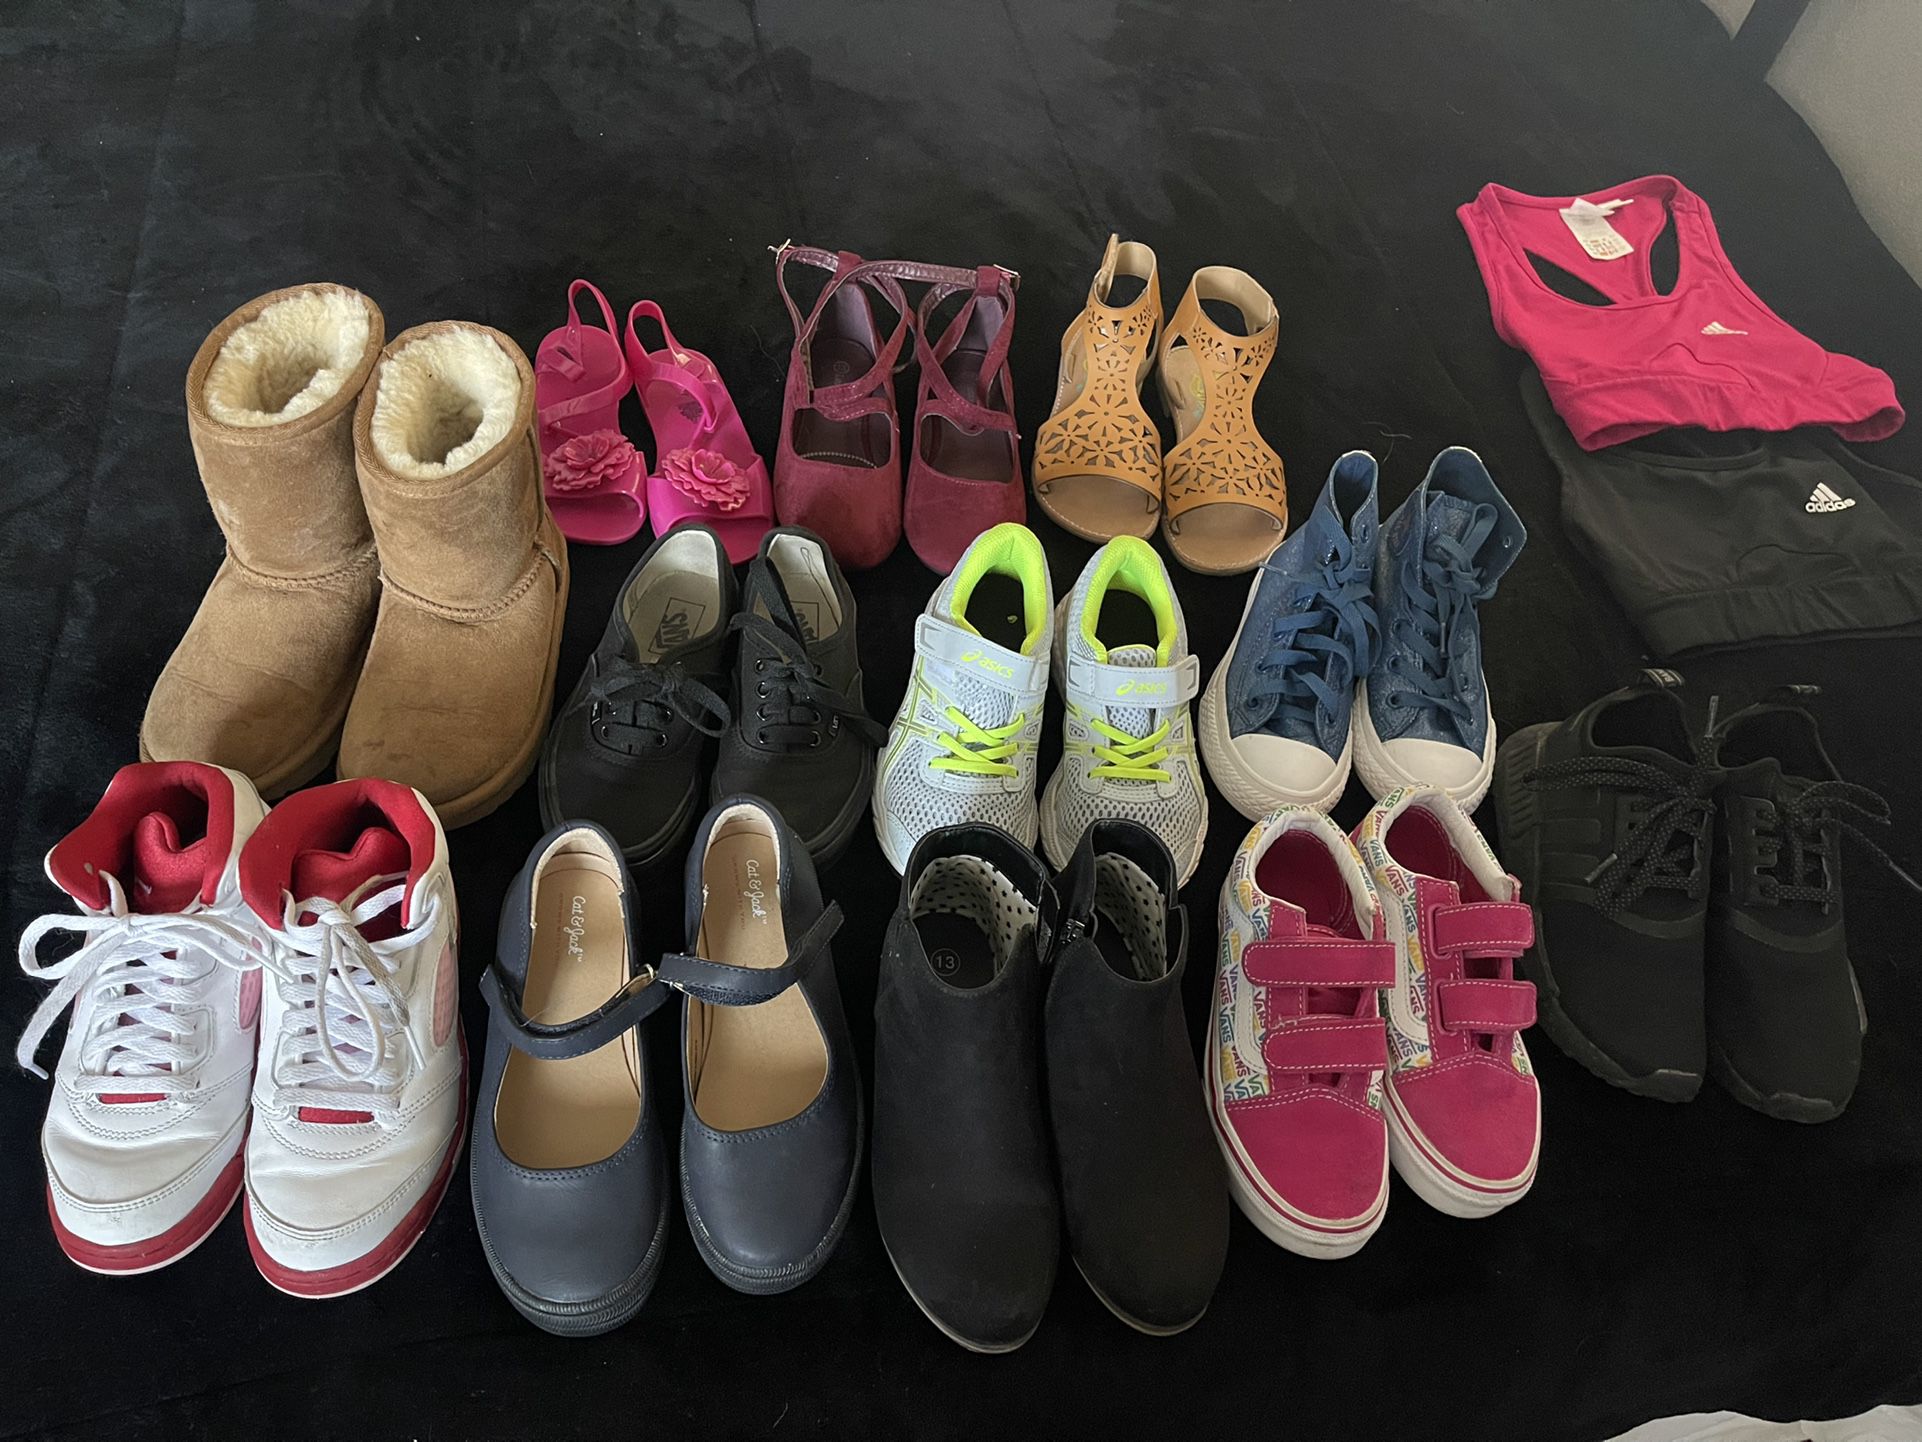 Vans,Jordan,converse,Ugg’s,adidas NMD ,shoes,sandals,boots 